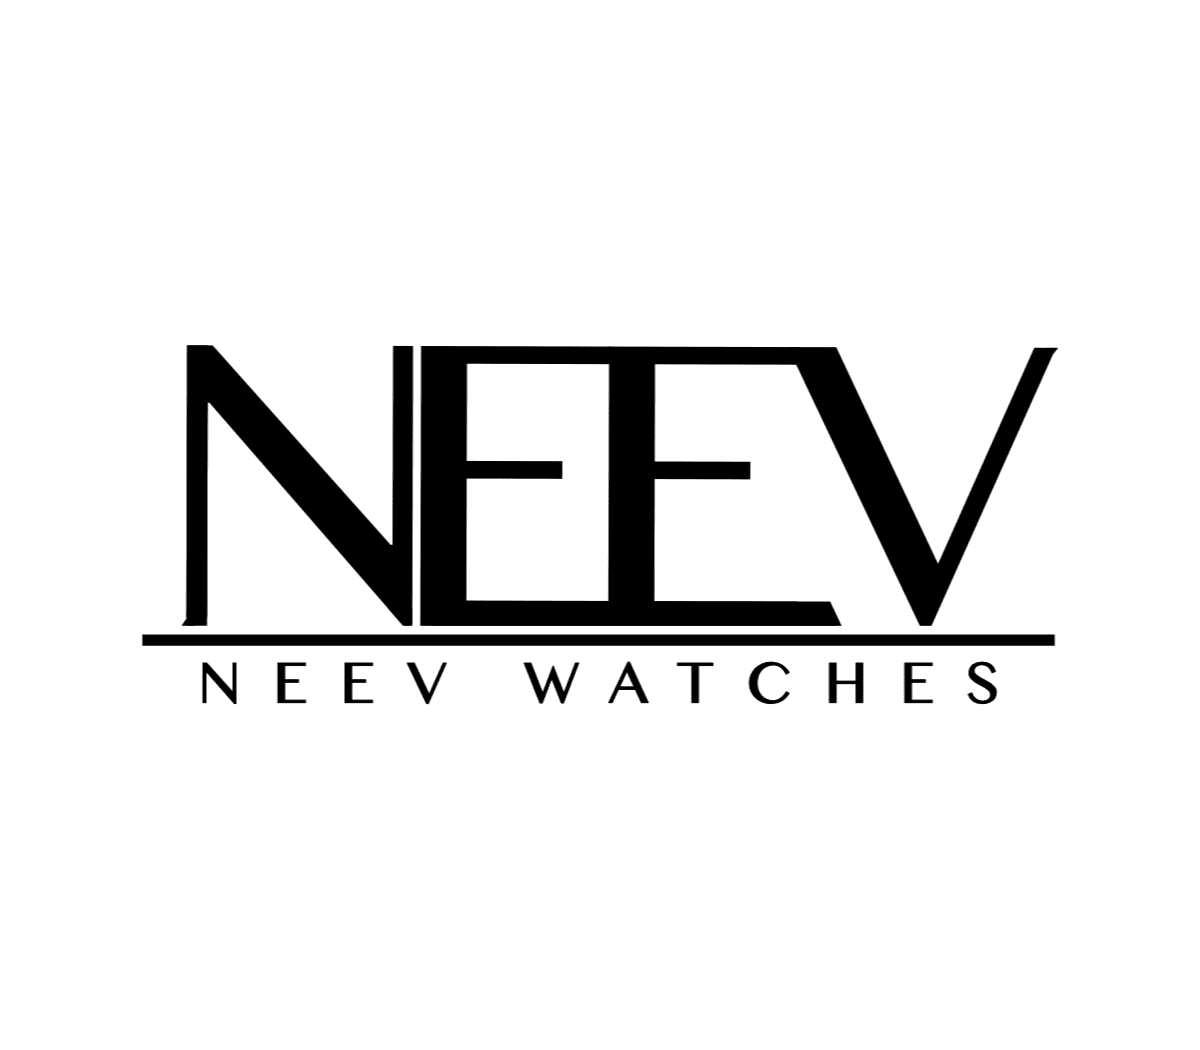 Neev watches logo